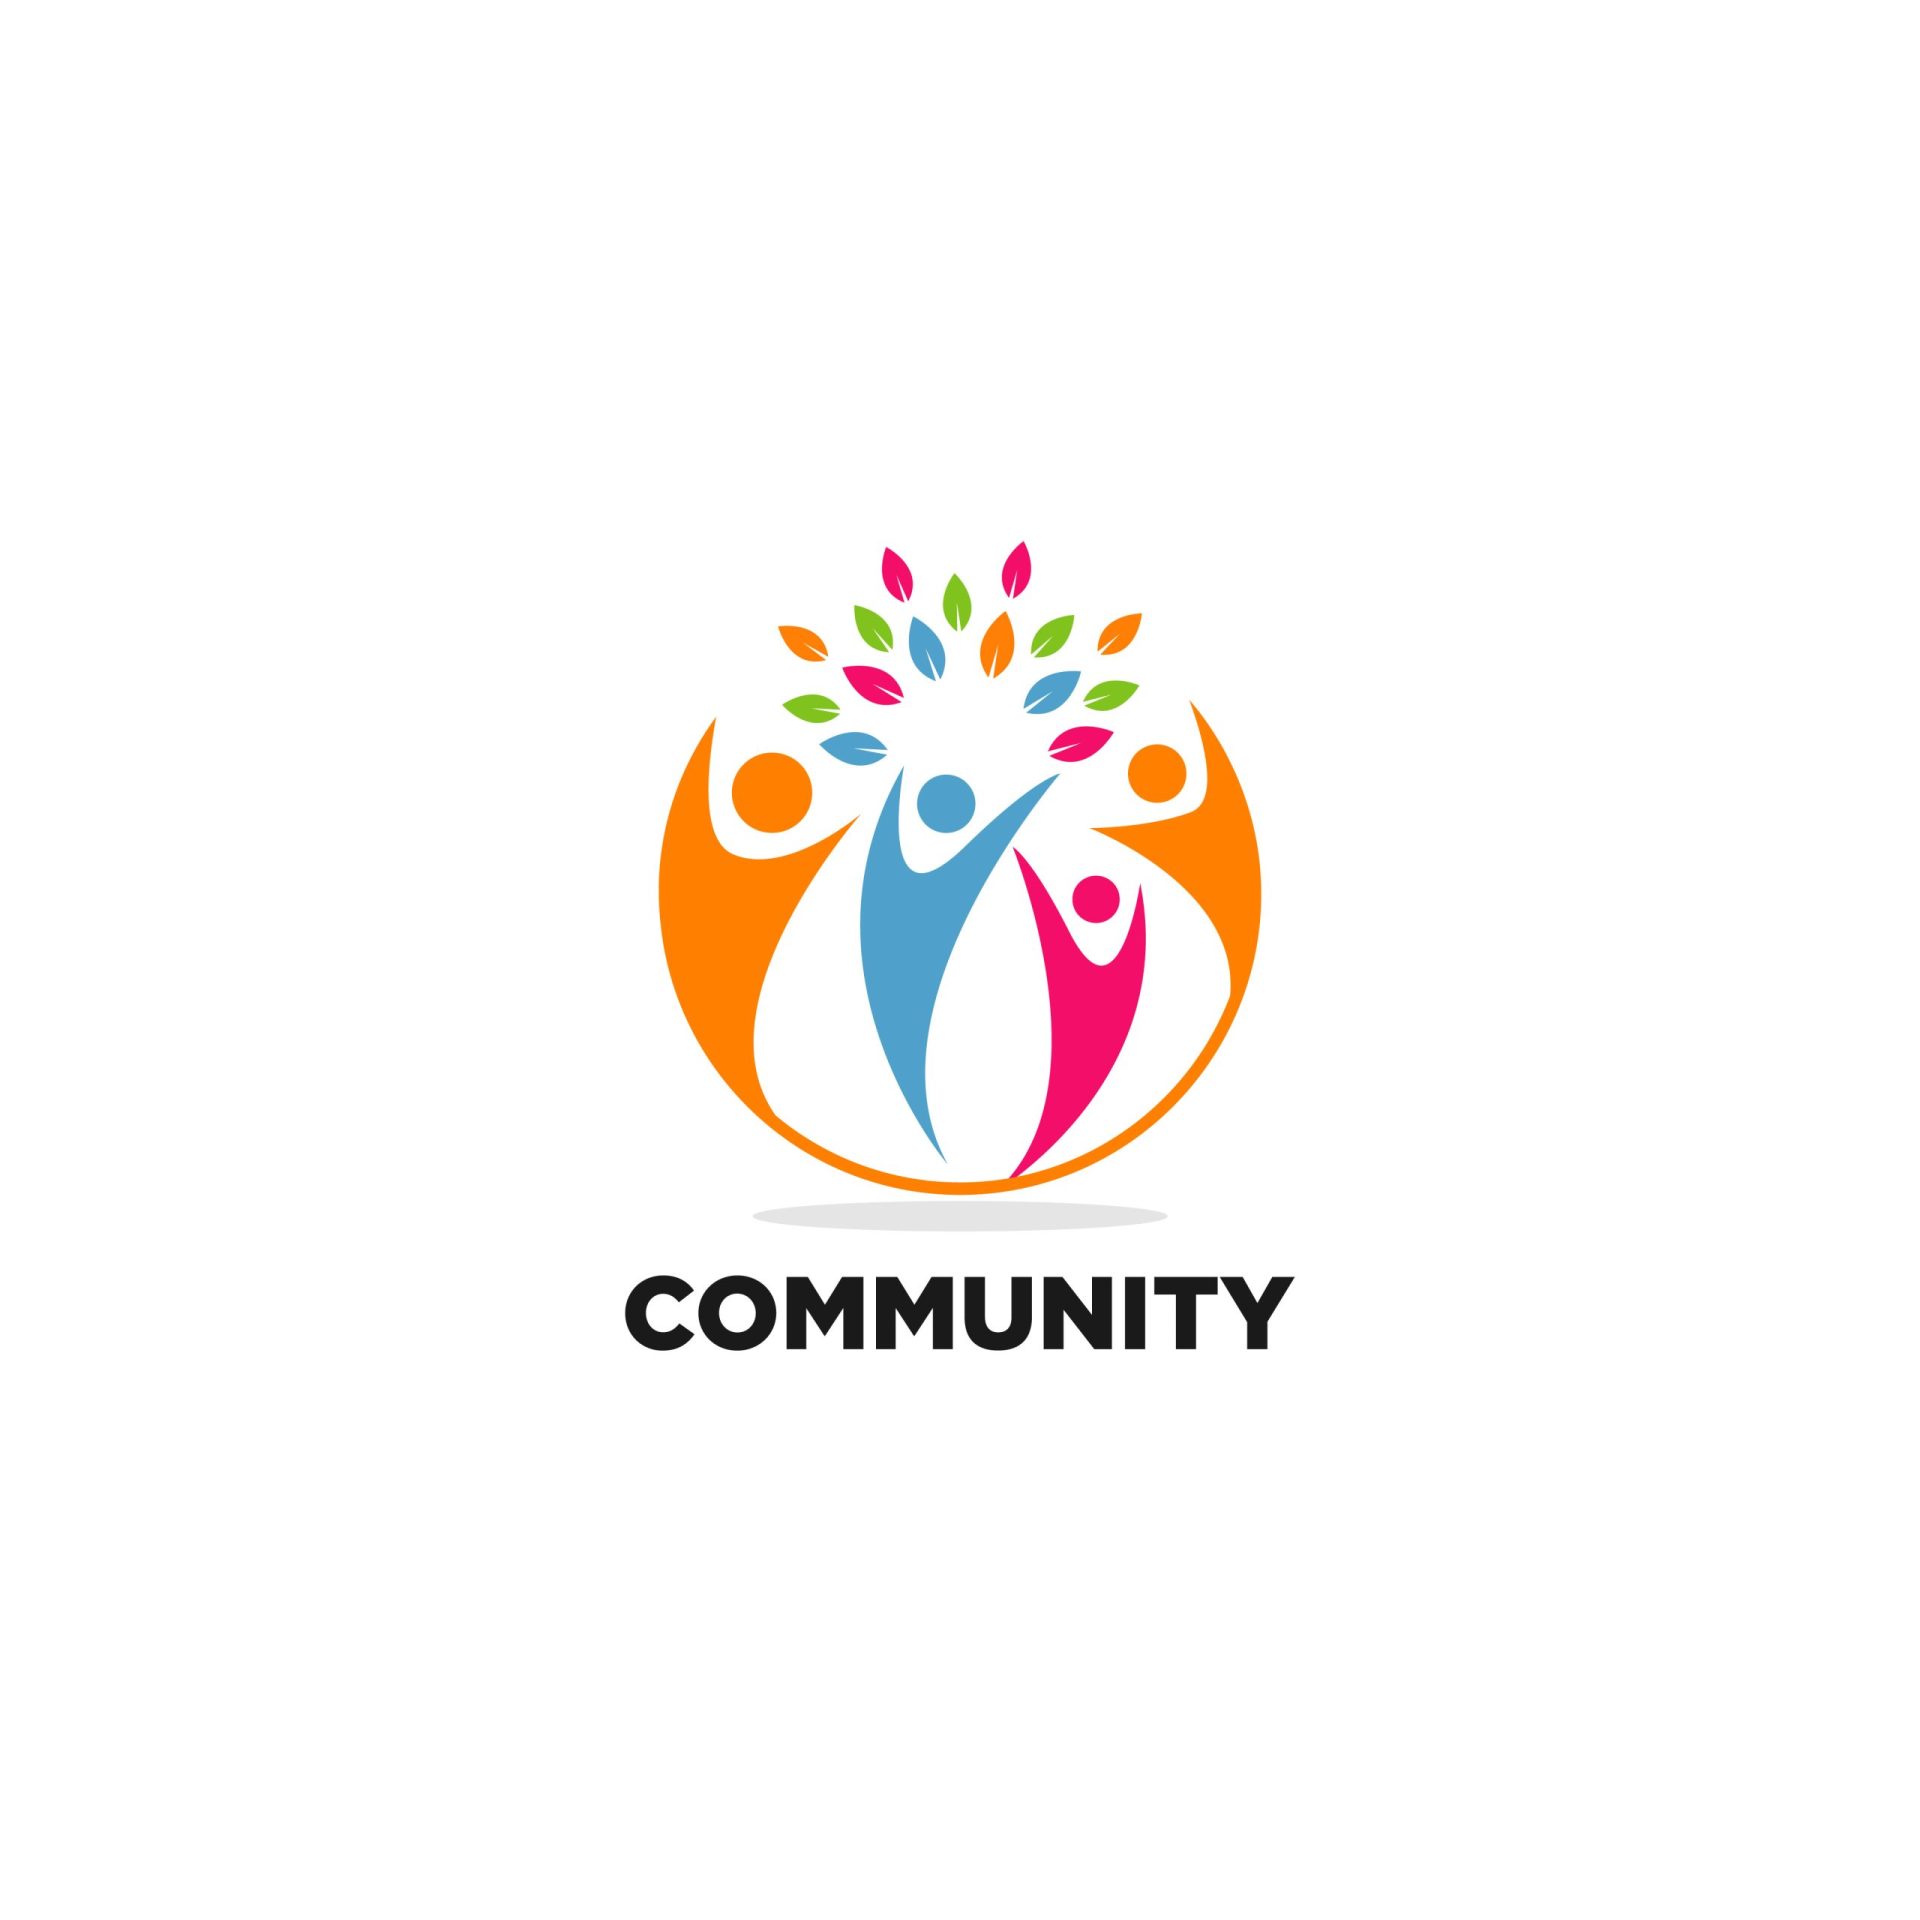 community logo ideas 2